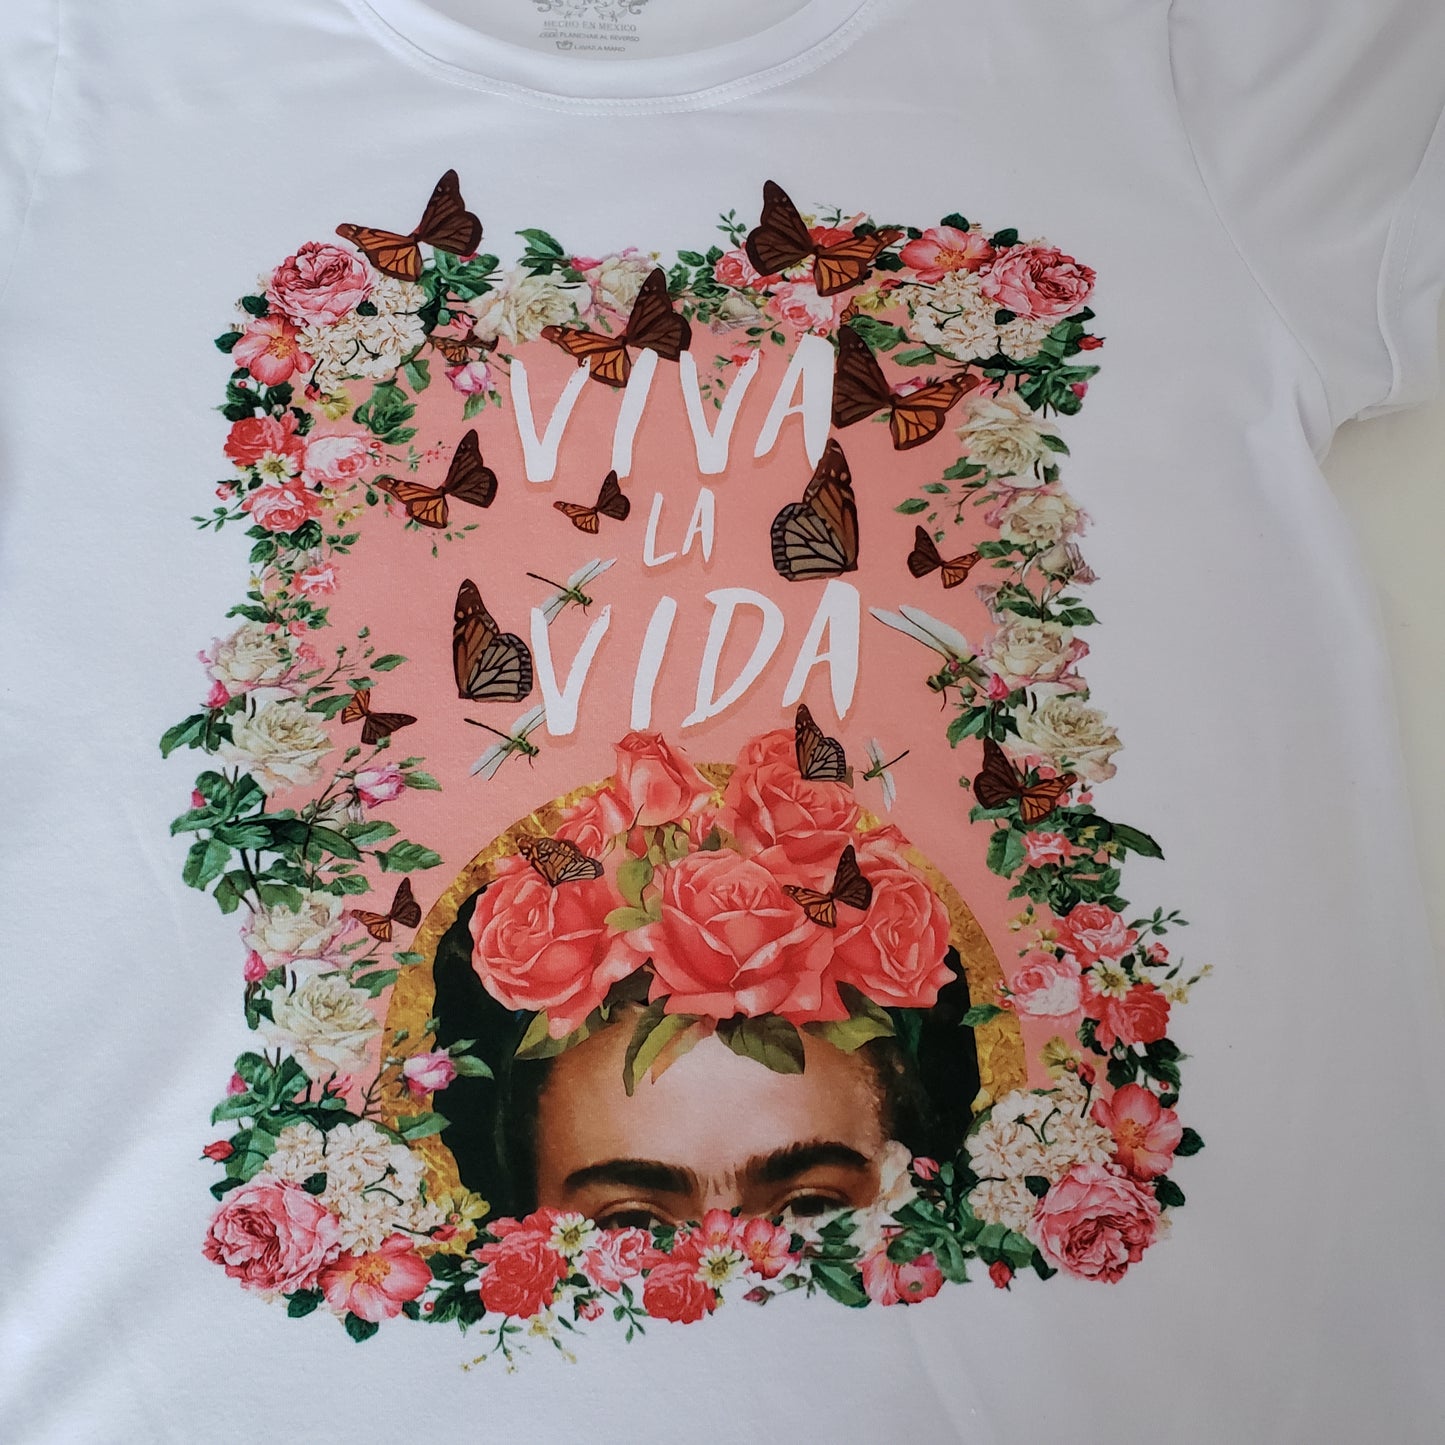 Frida Kahlo Viva La Vida T-Shirt Women's Graphic Tee - The Little Pueblo